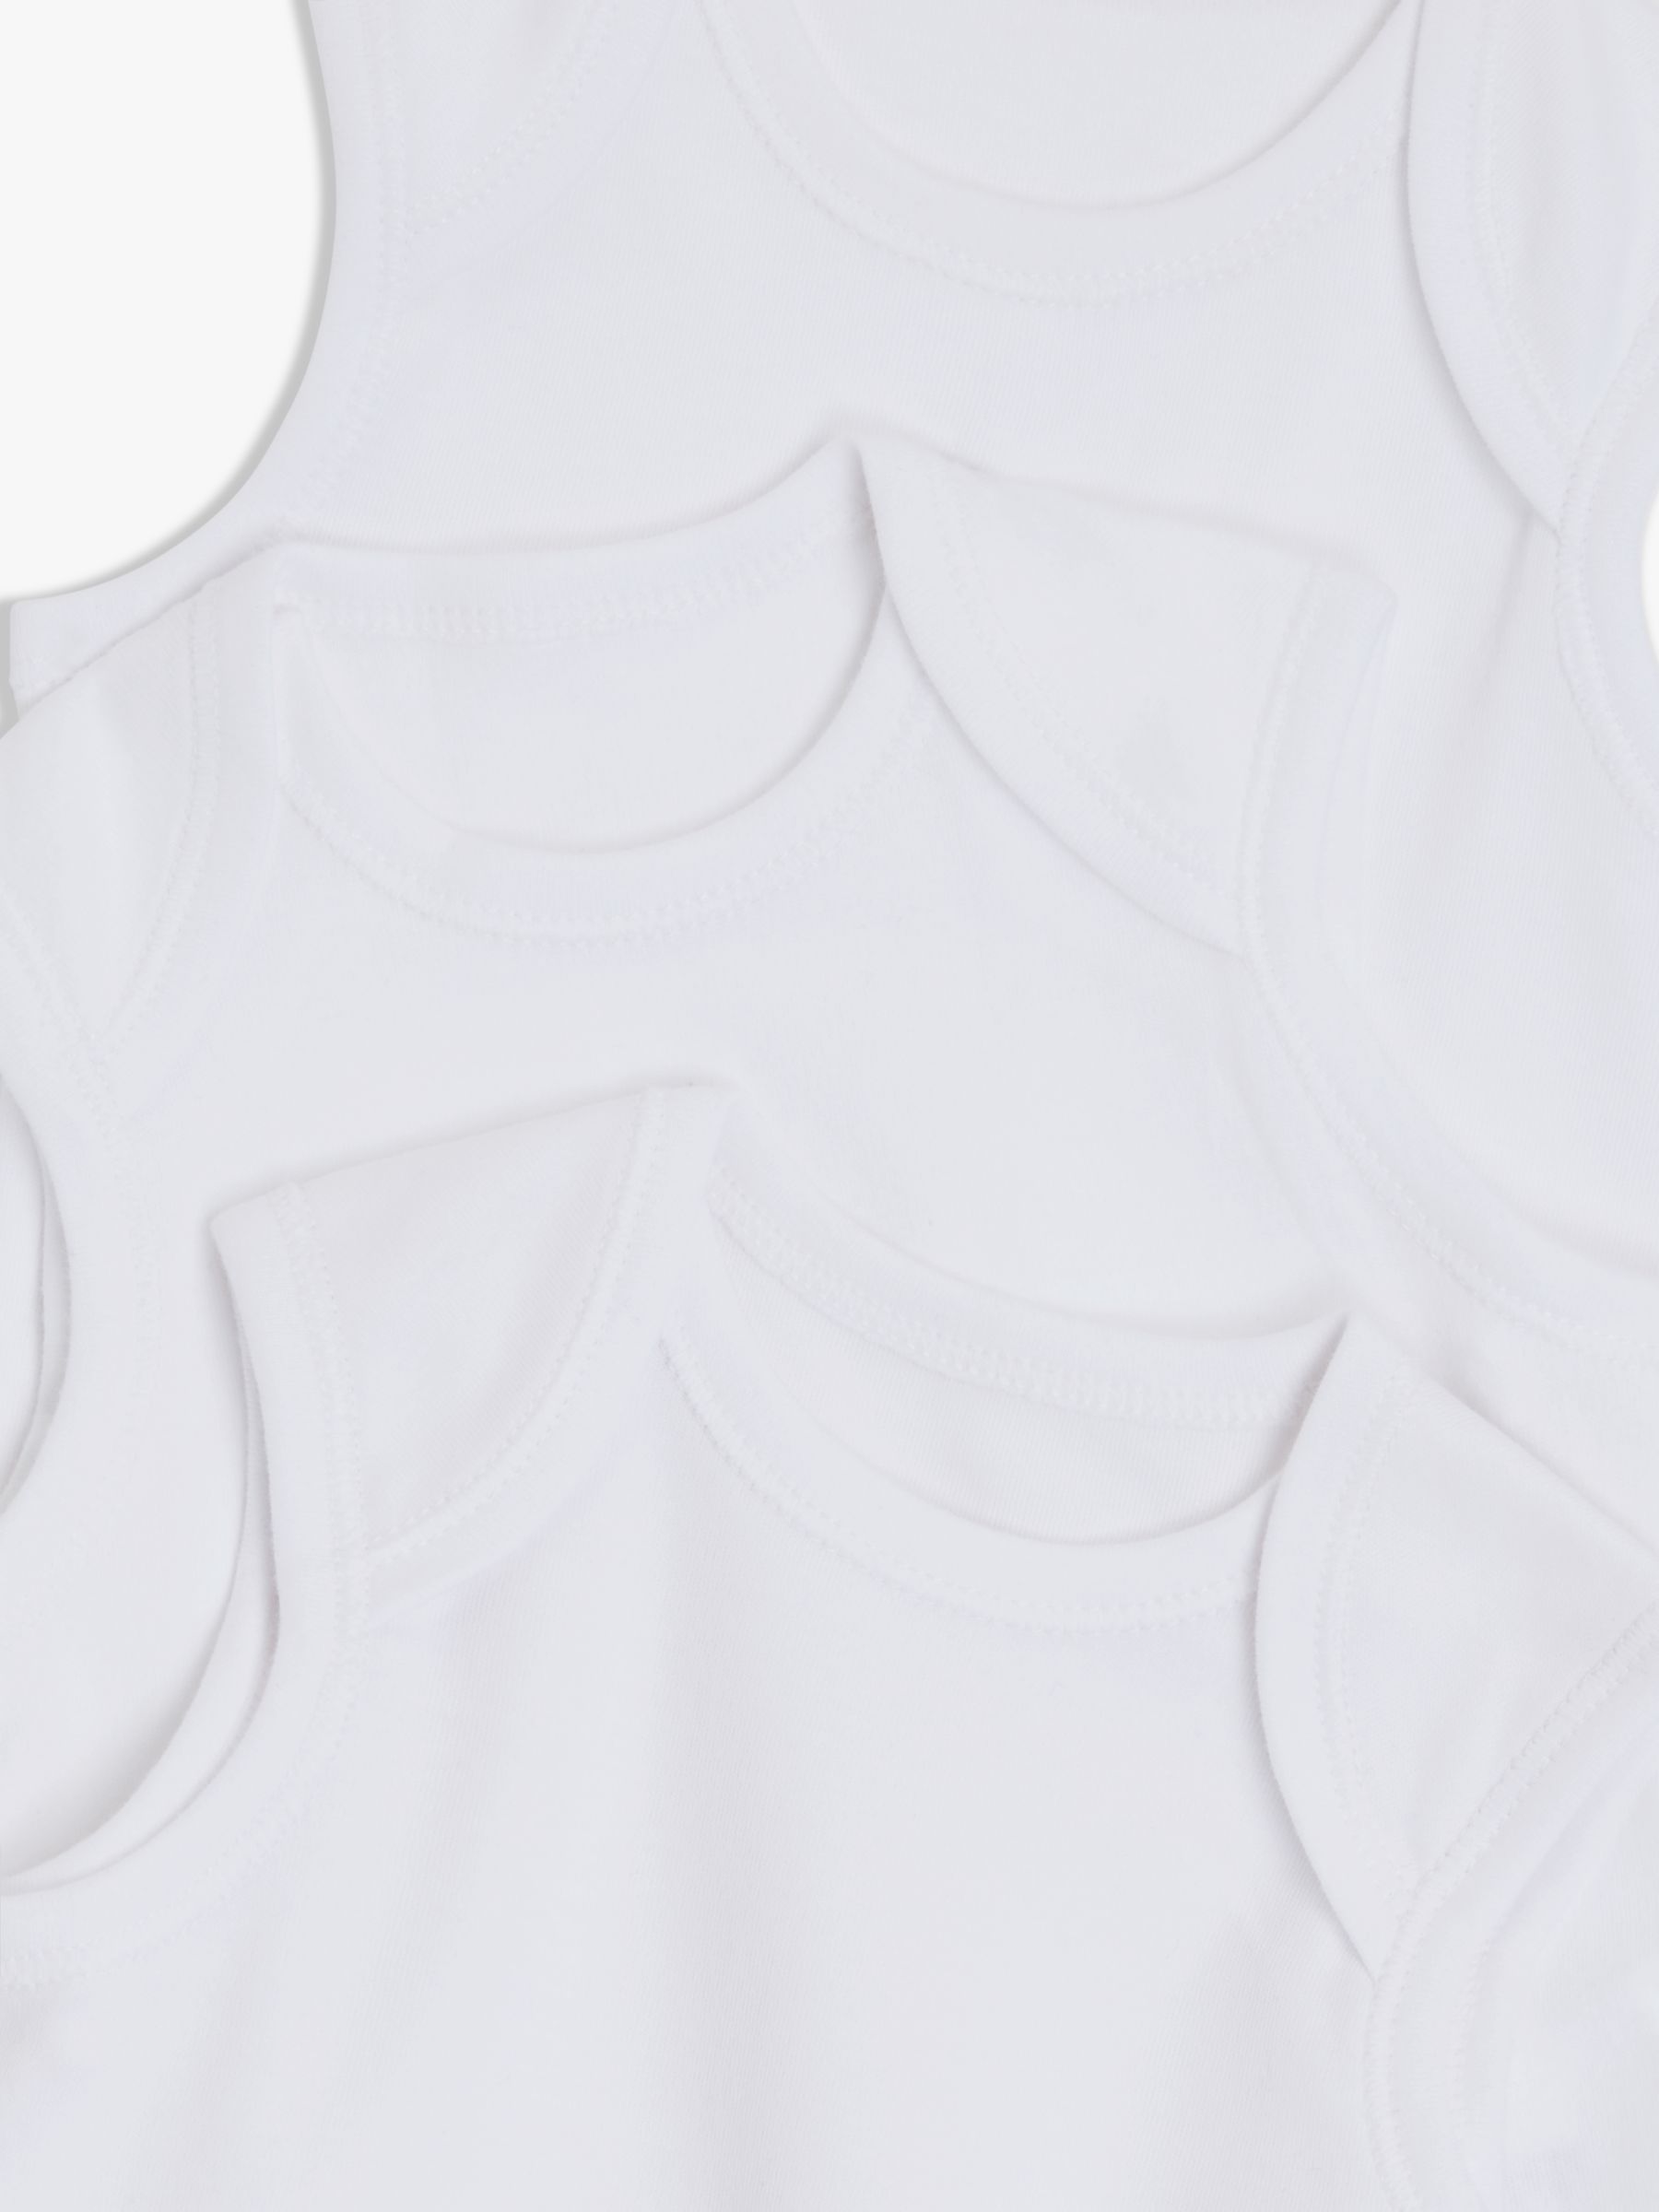 Buy John Lewis Baby GOTS Organic Cotton Sleeveless Bodysuits, Pack of 5, White Online at johnlewis.com